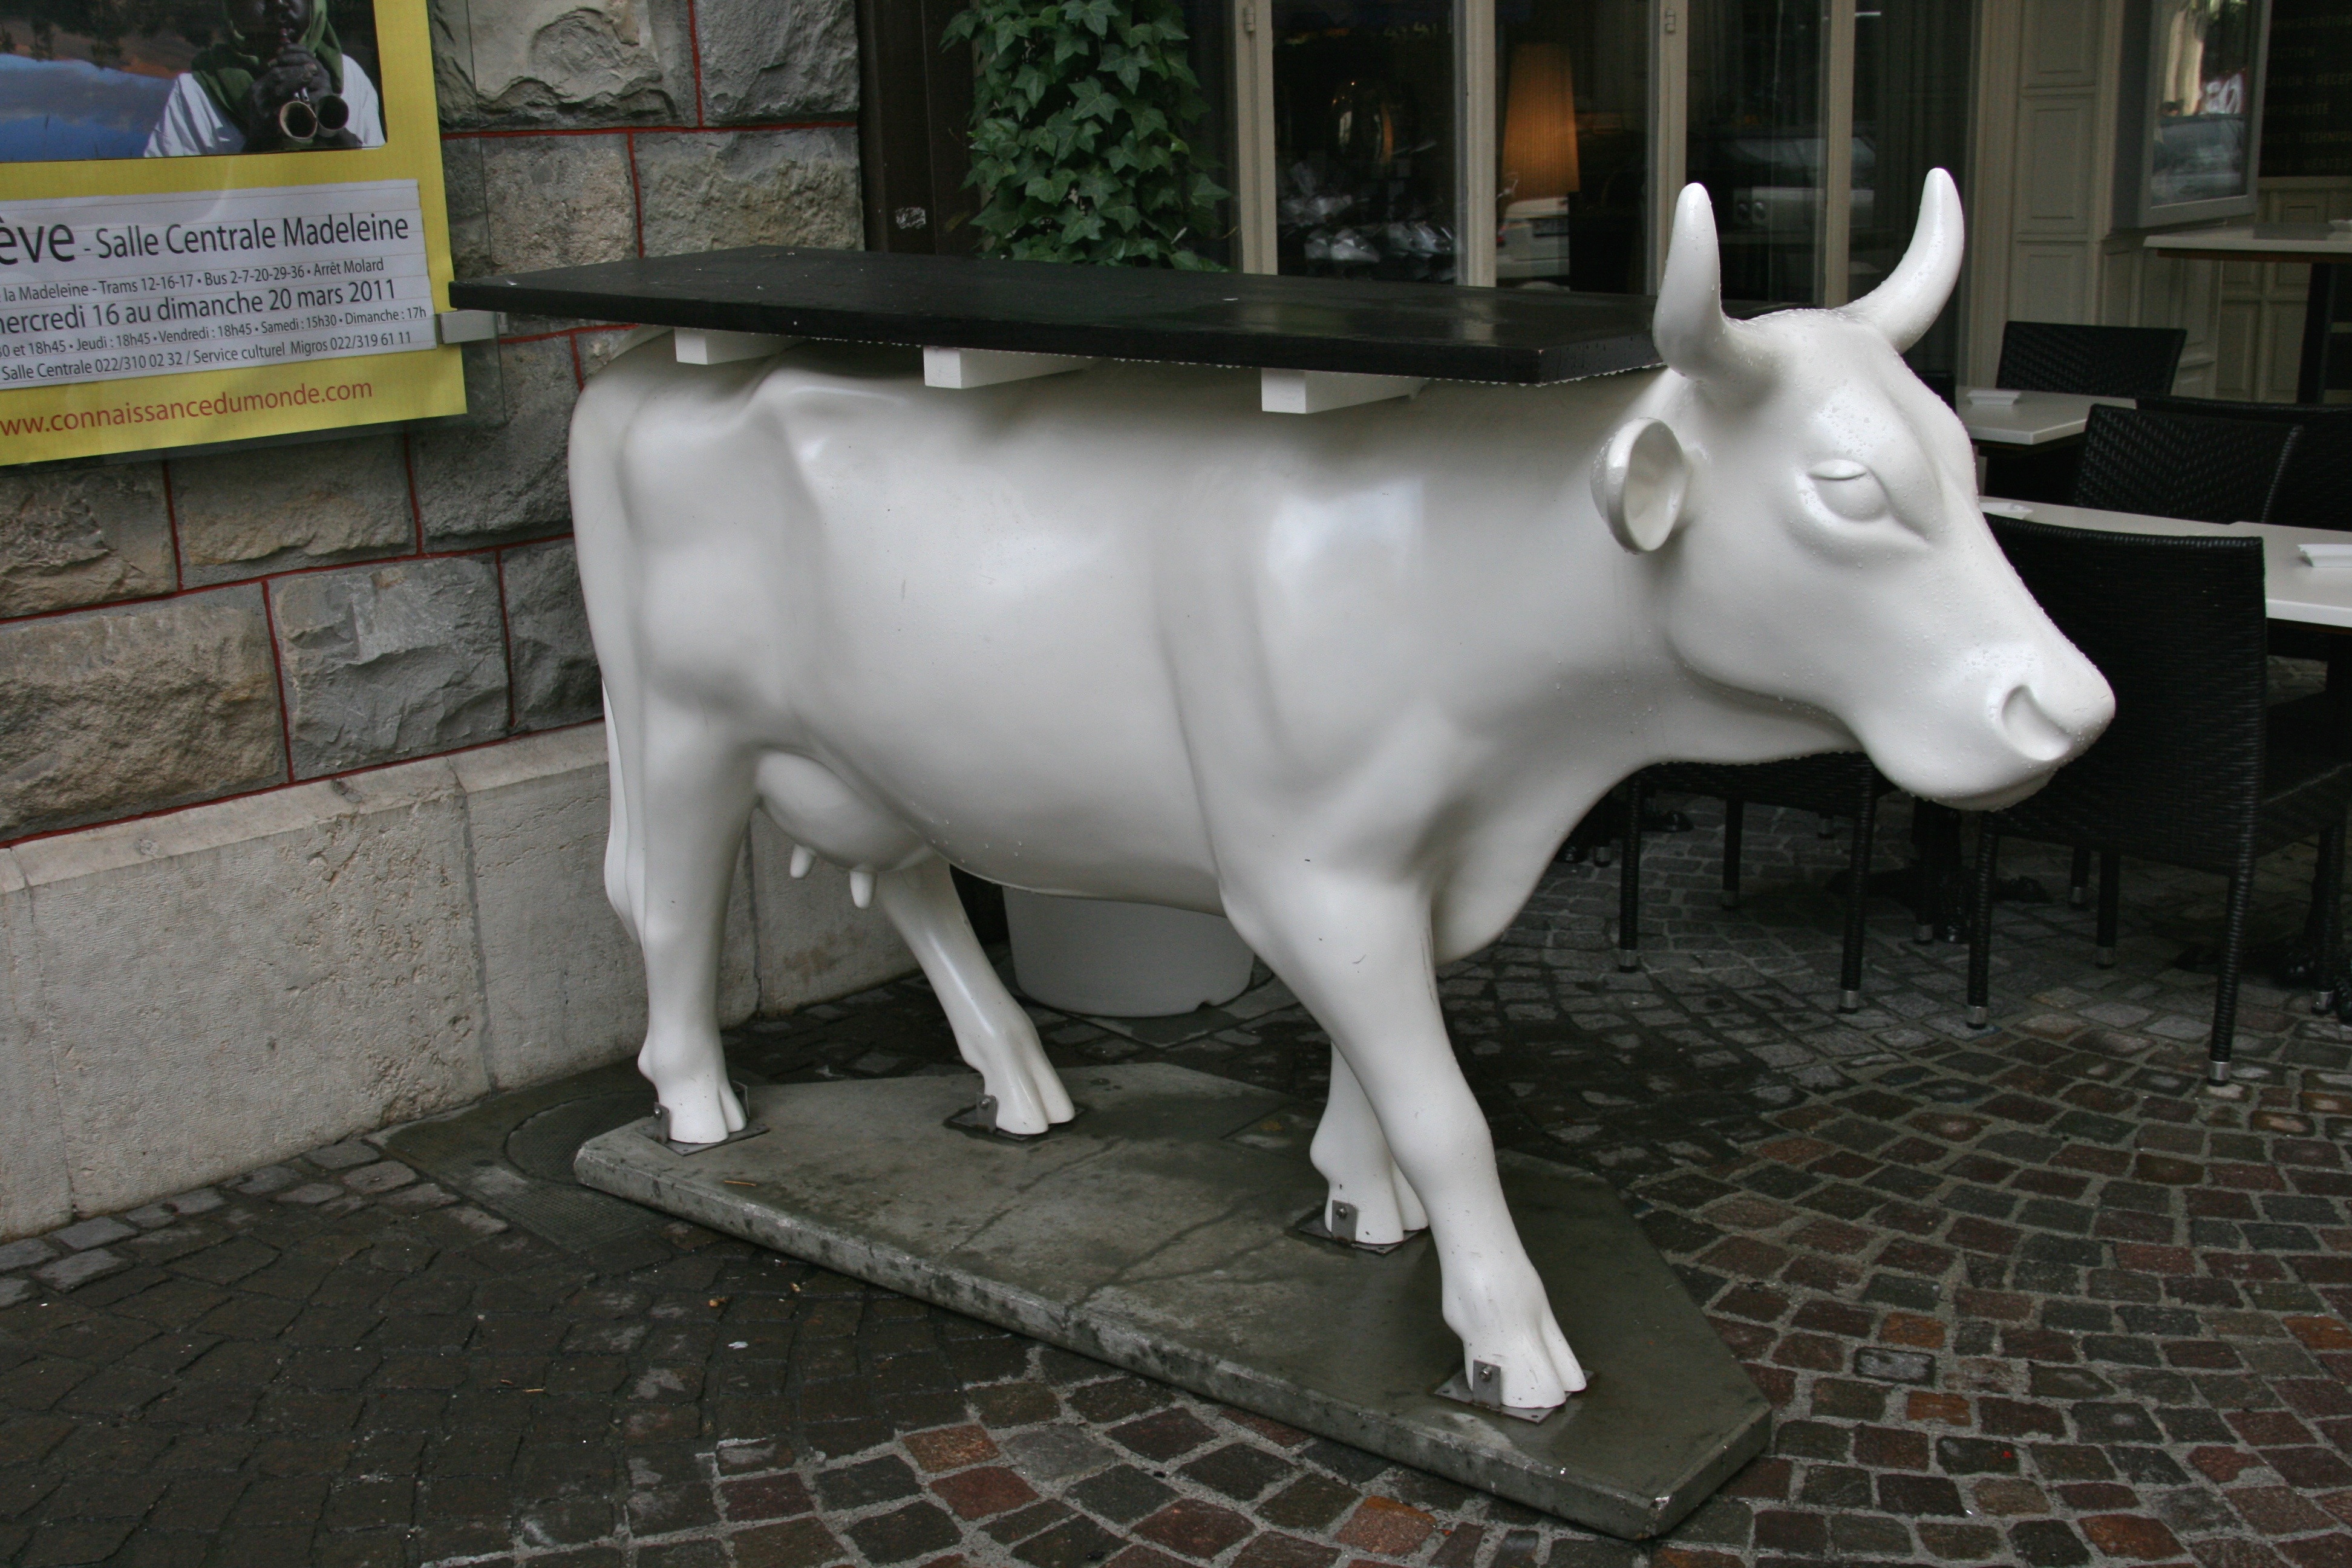 File:Cow statue at Geneva.jpg - Wikimedia Commons